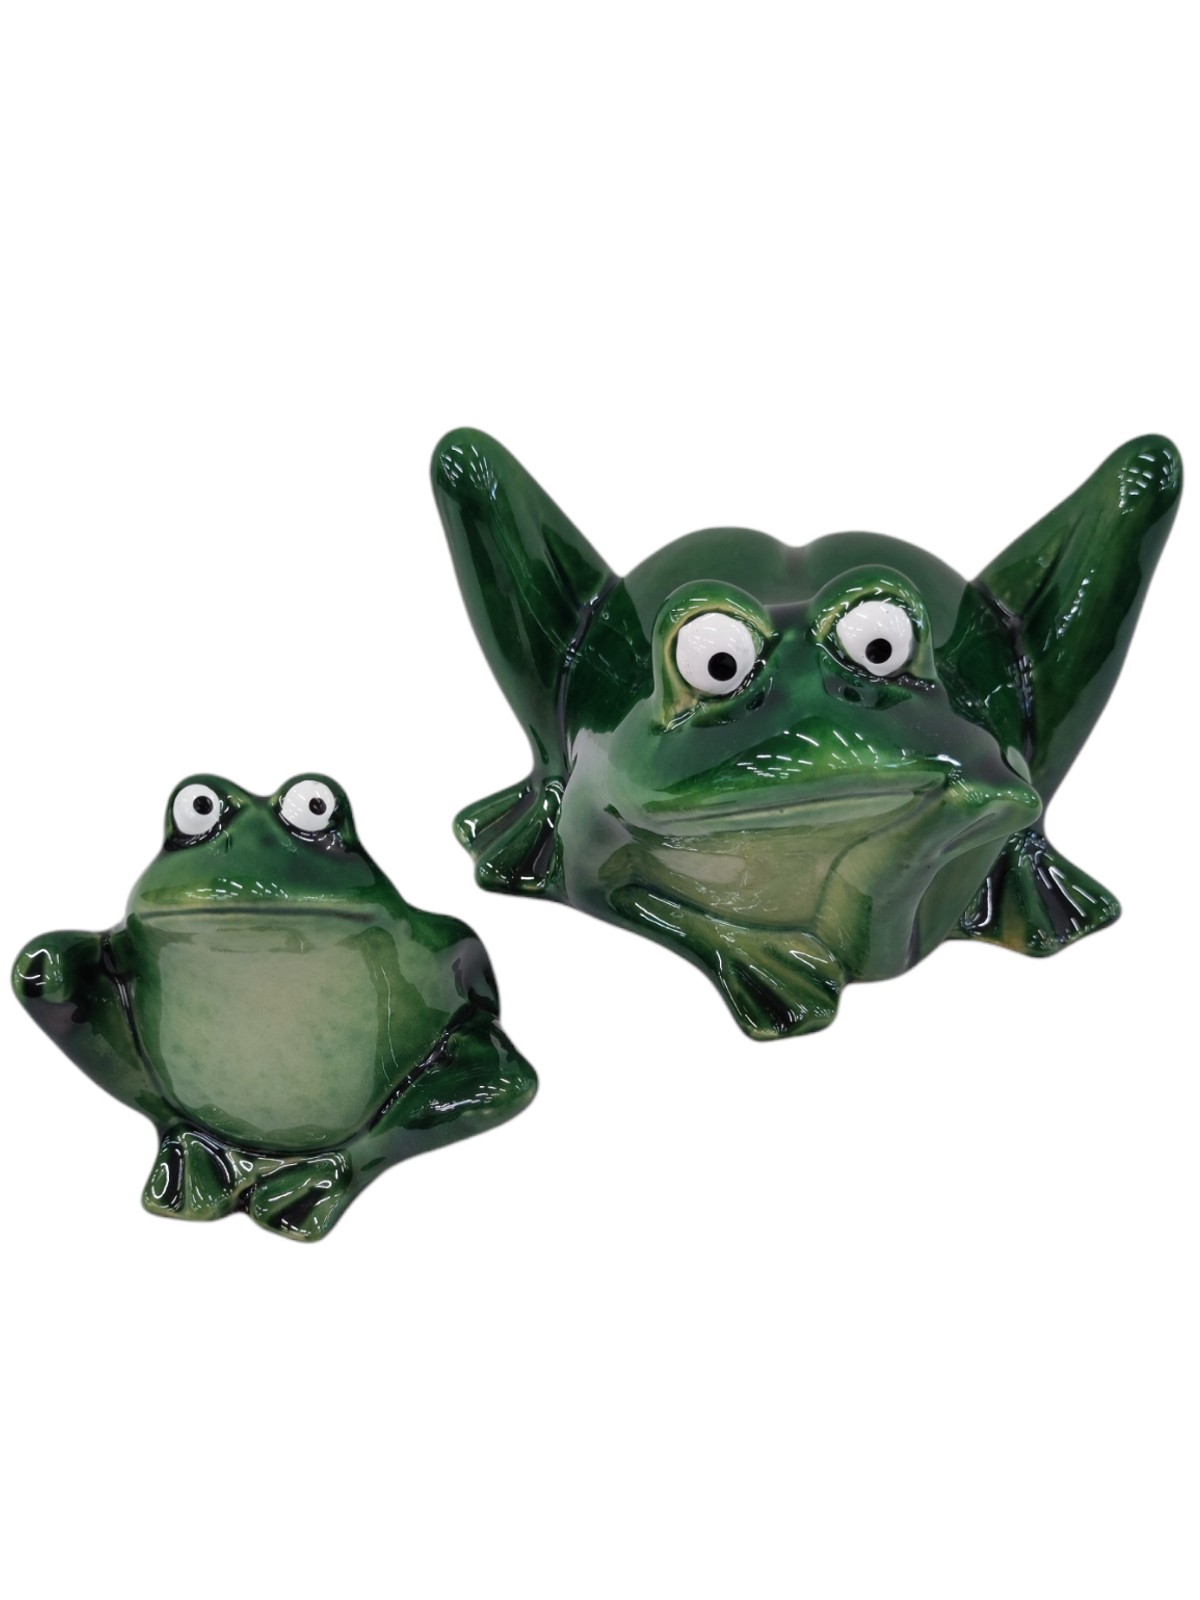 Decorative frog